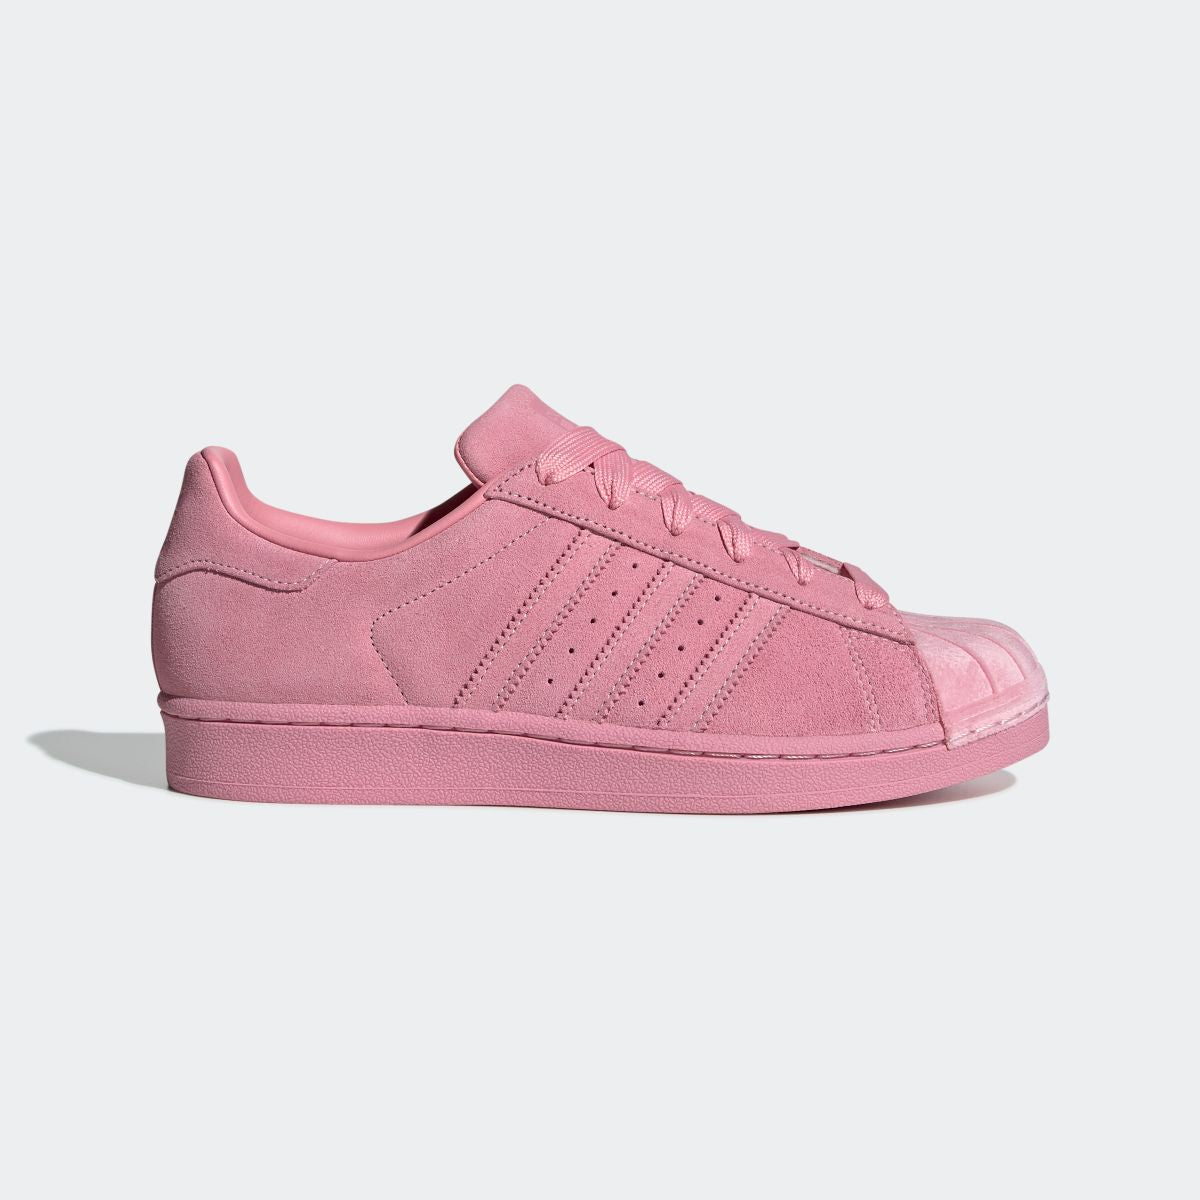 adidas Superstar Shoes Pink CG6004 